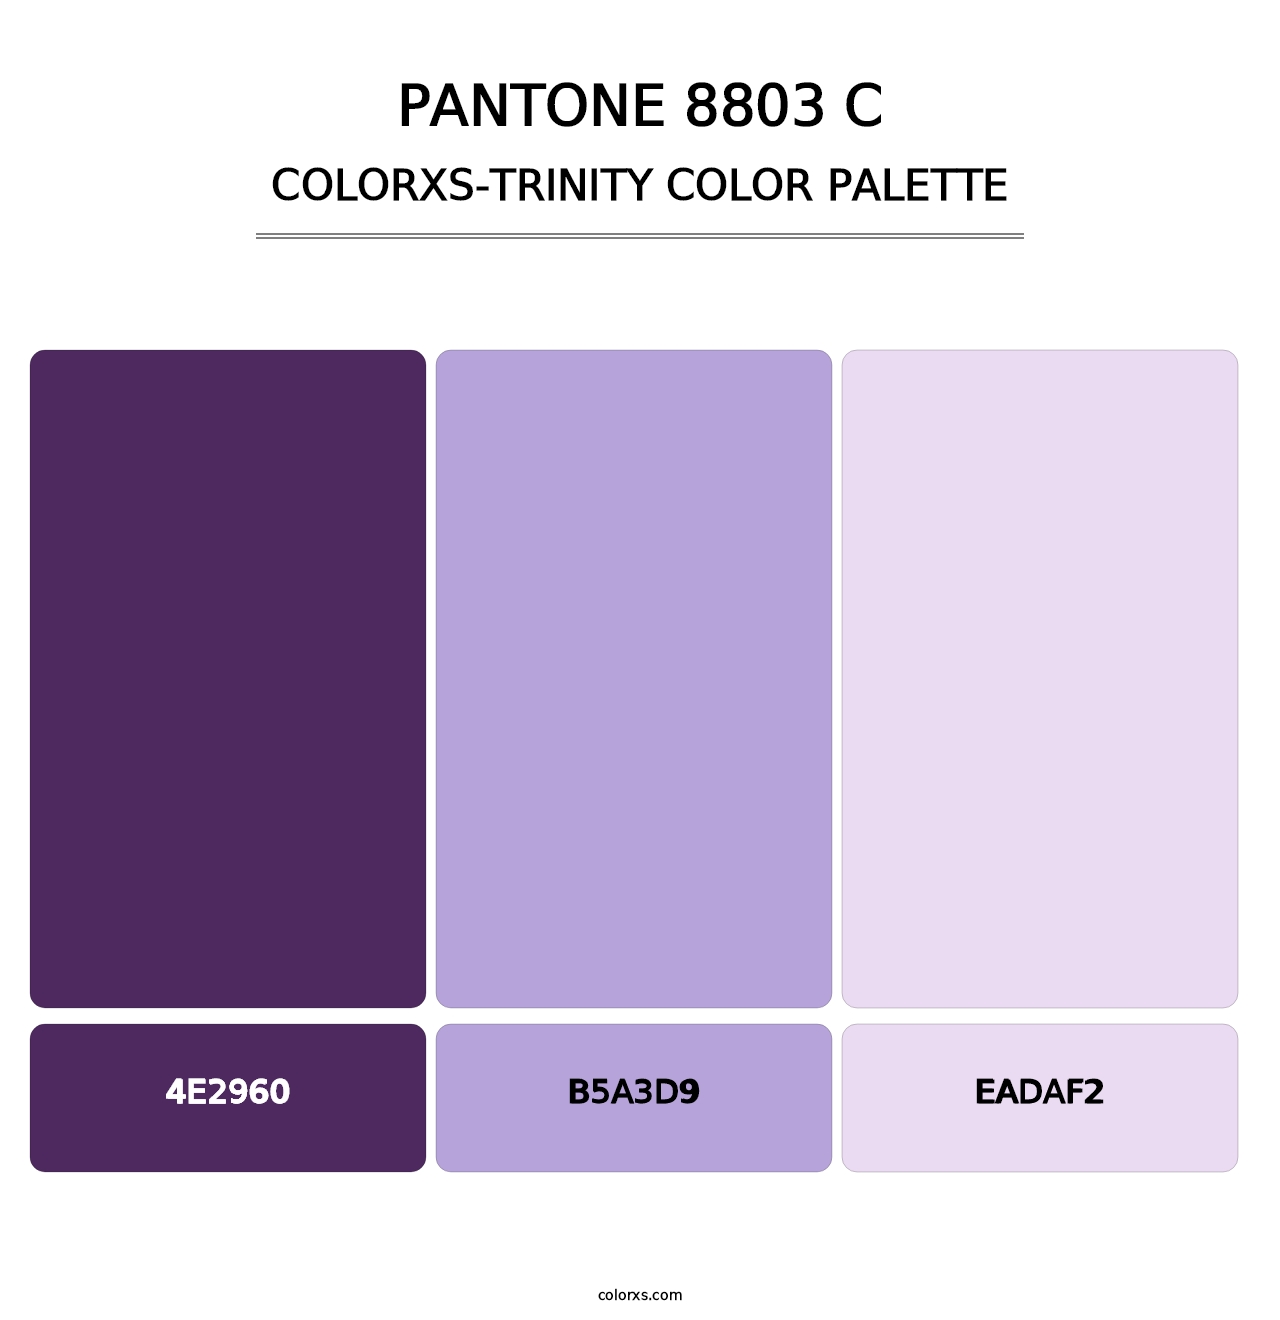 PANTONE 8803 C - Colorxs Trinity Palette